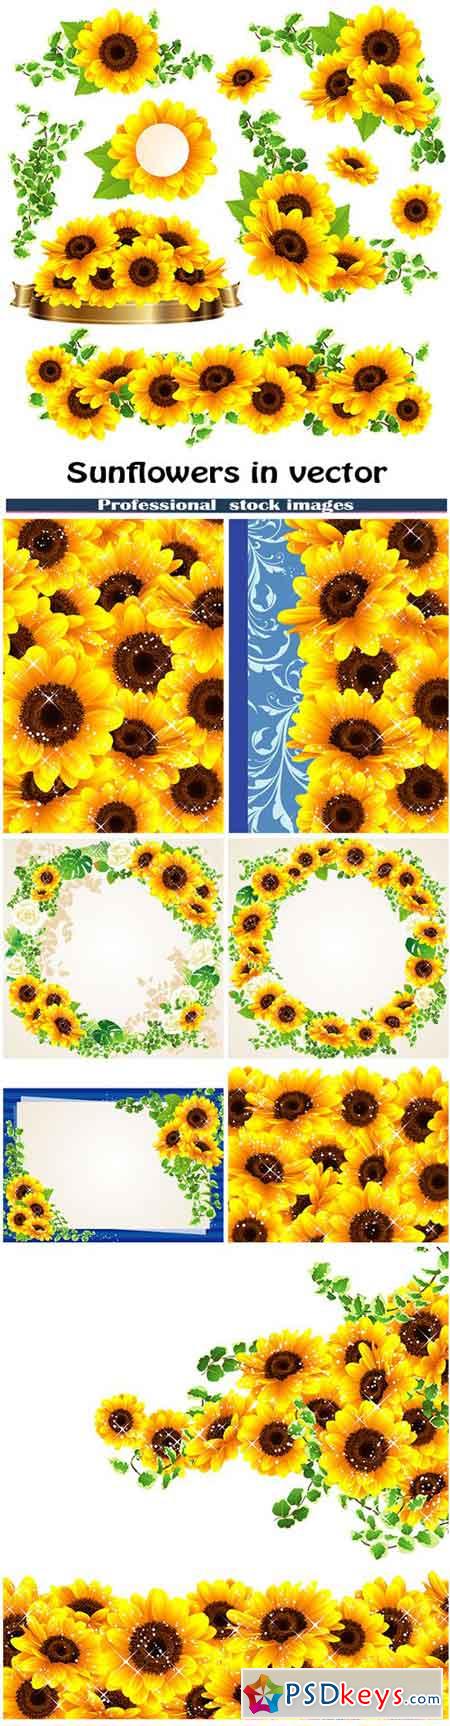 Sunflowers in vector